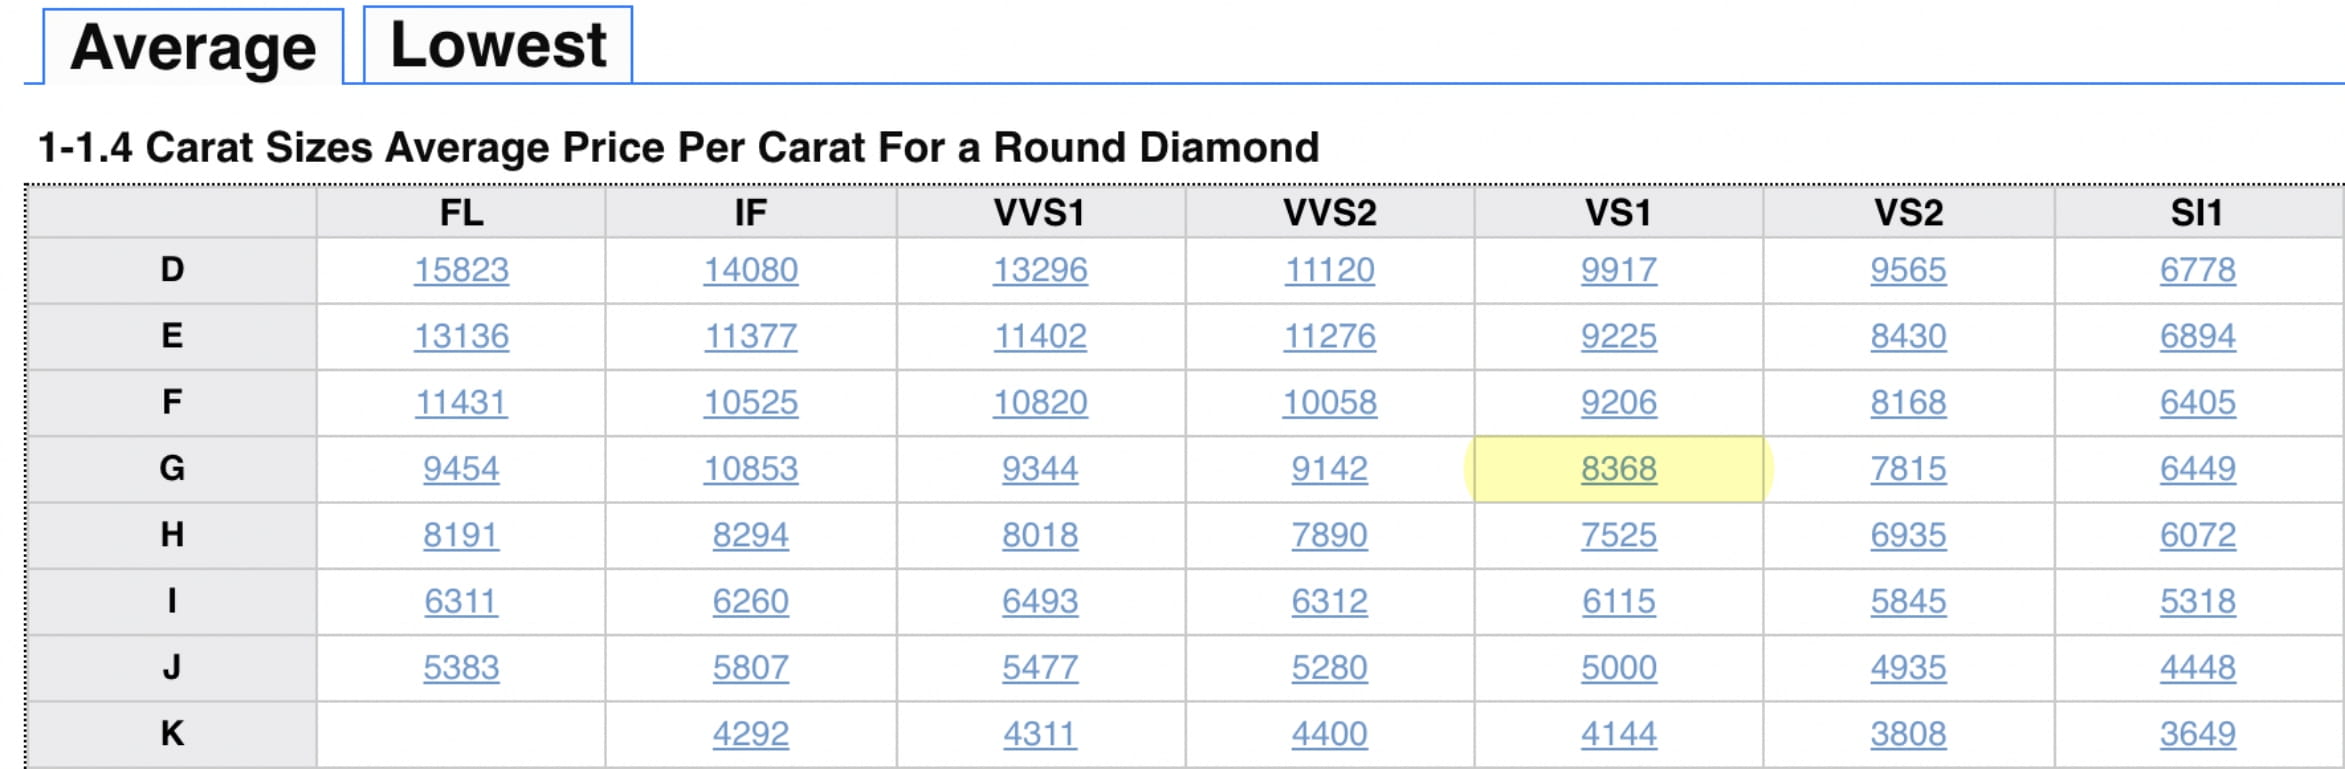 Average Diamond Price per Carat.